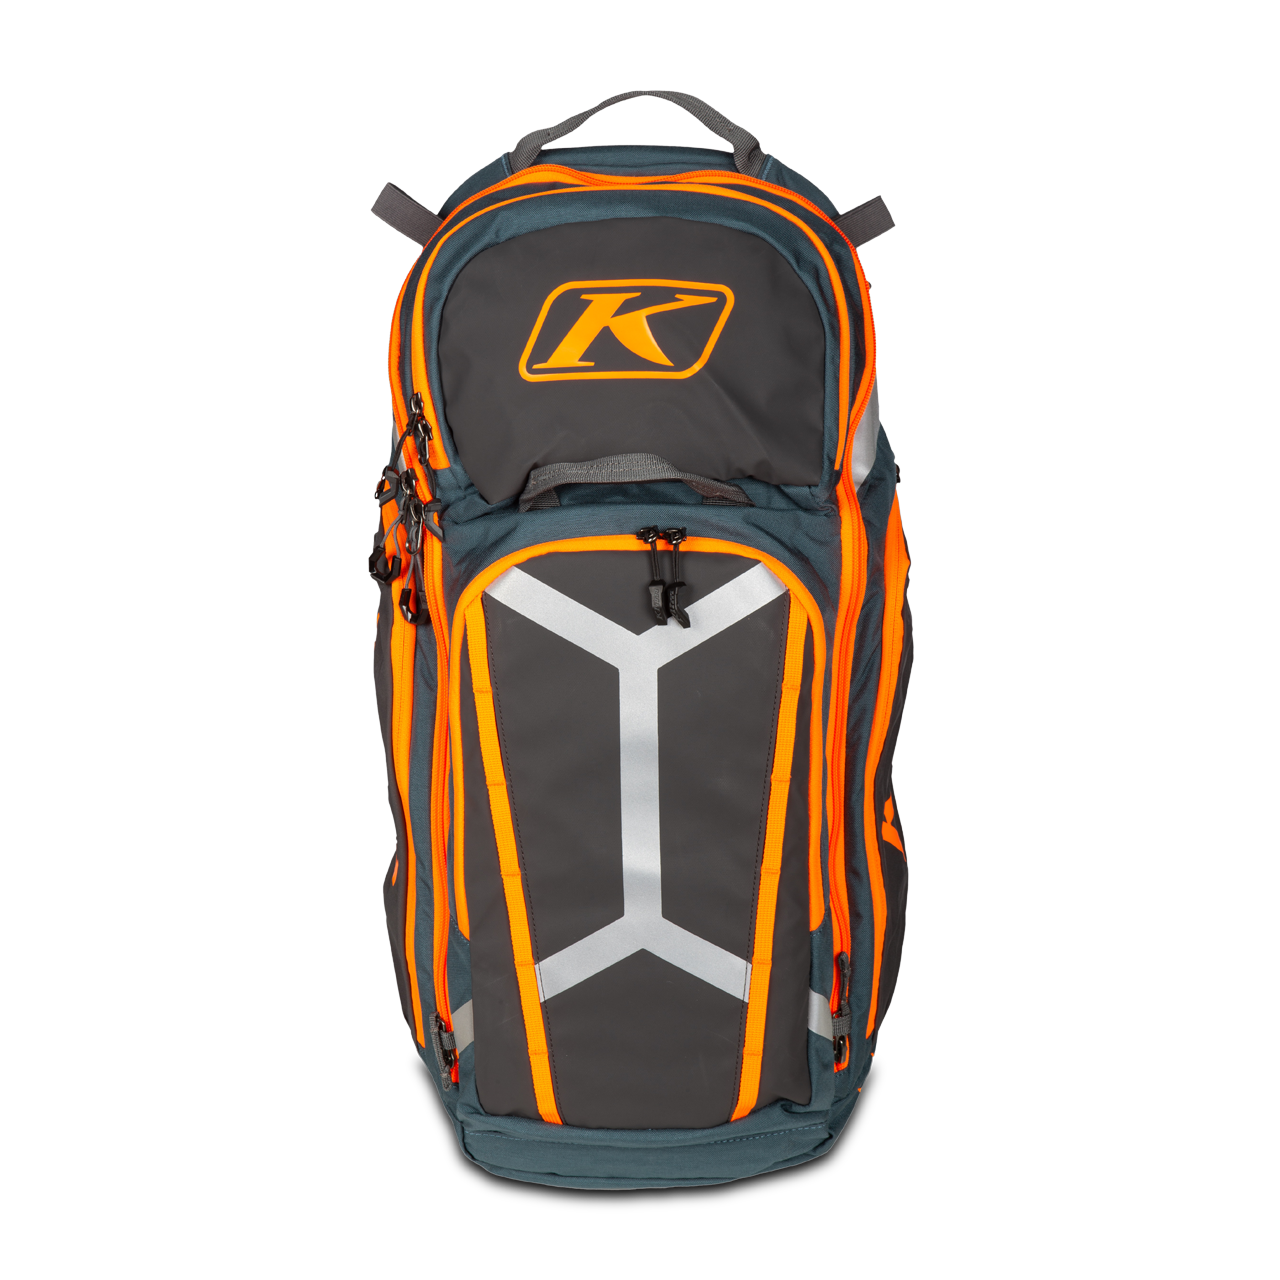 Amazon.com: KLIM Arsenal 15 Motorcycle Backpack Asphalt : Automotive